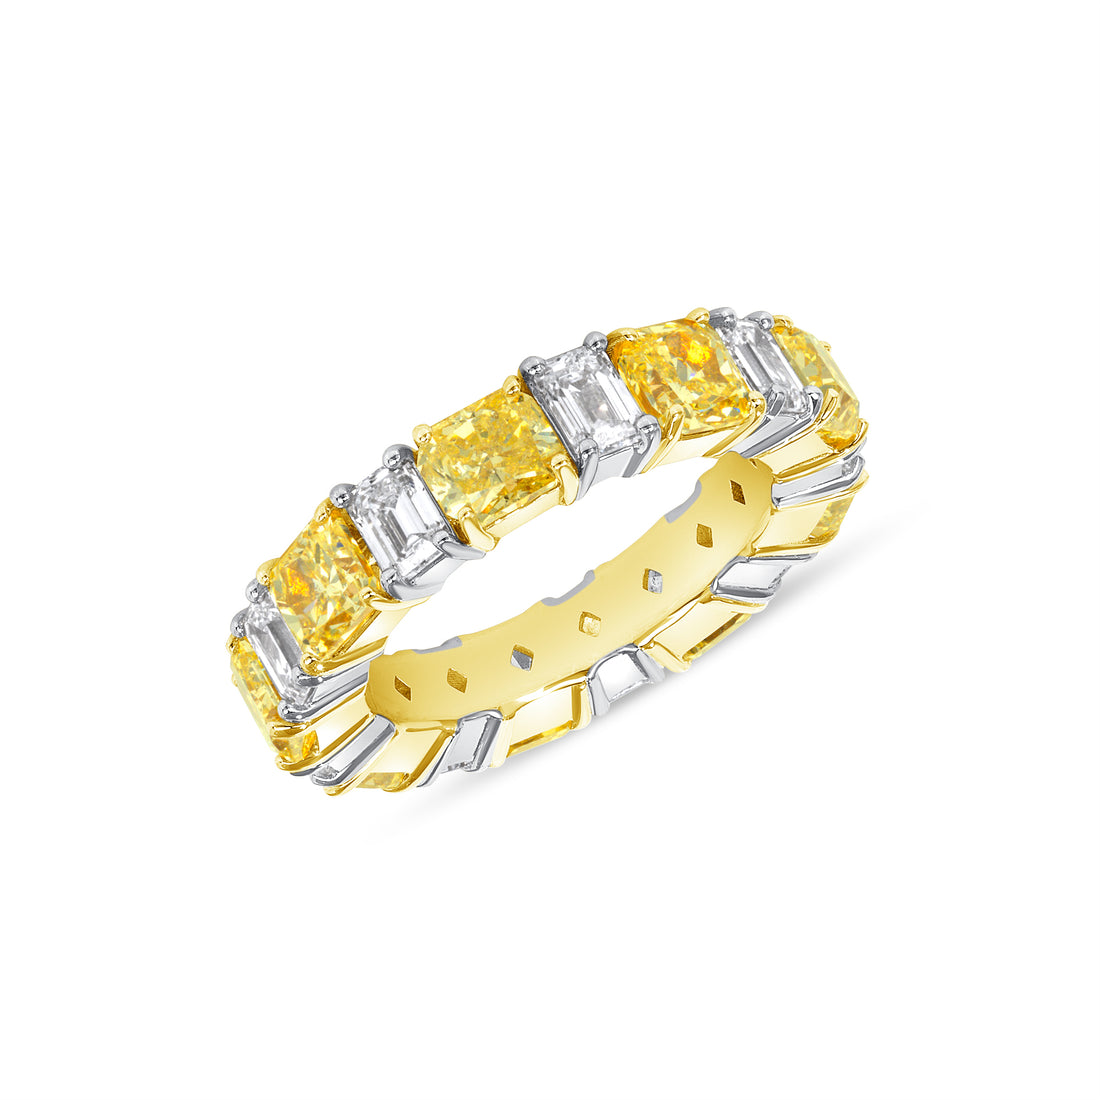 7.12 CT. Alternating Cushion Cut Fancy Intense Yellow Diamond and Emerald Cut Diamond Ring in 18K Yellow Gold and Platinum